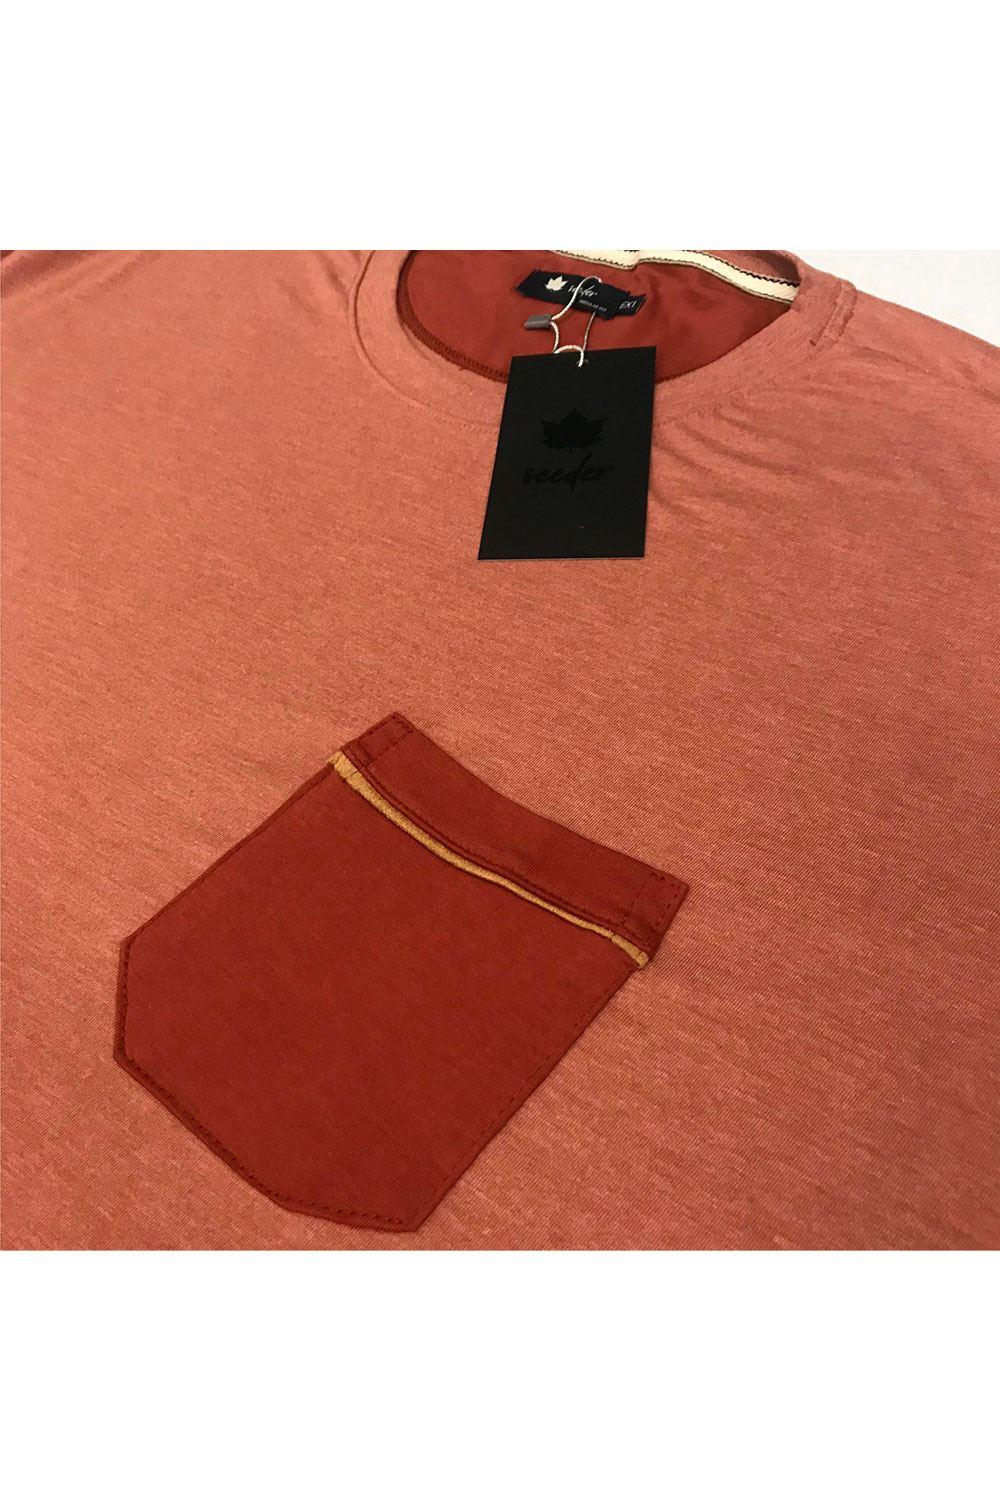 camiseta masculina plus size tamanhos grandes nobres vermelho mango se0305011 vm0046 1